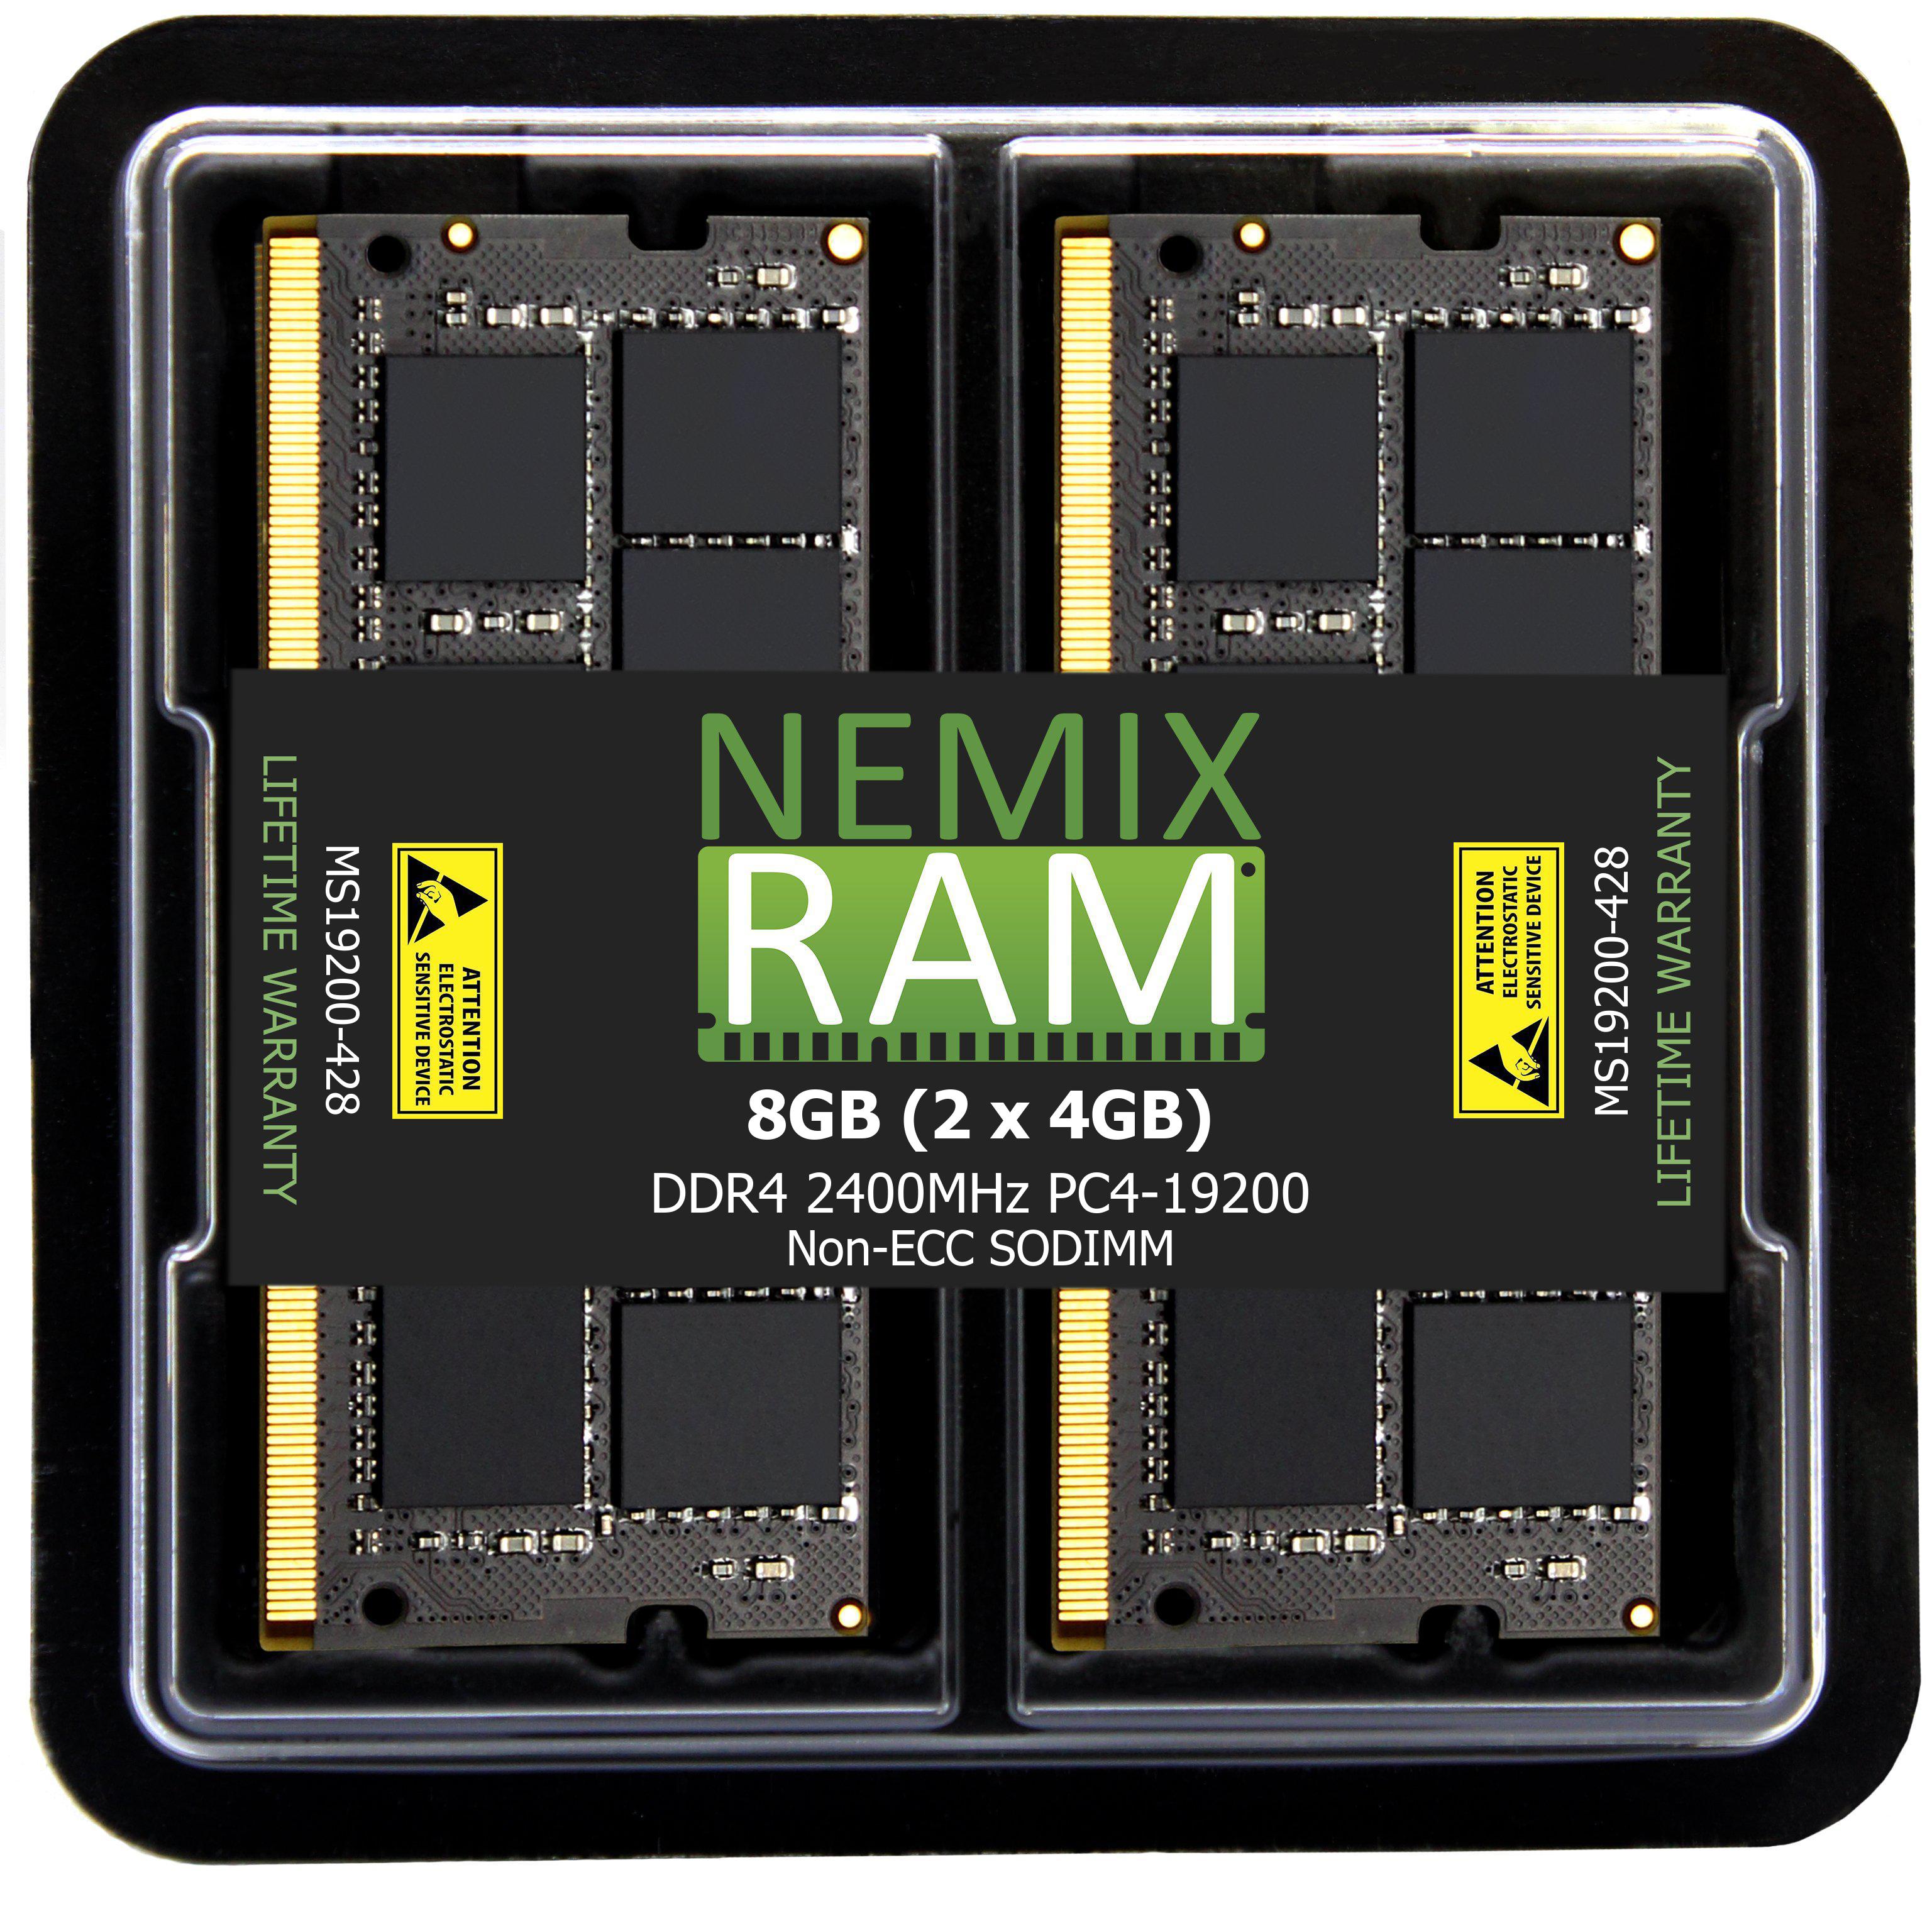 NEMIX RAM Memory Upgrade equivalent to ASUSTOR AS-4GD4 92M11-S4D40  SODIMM Memory module